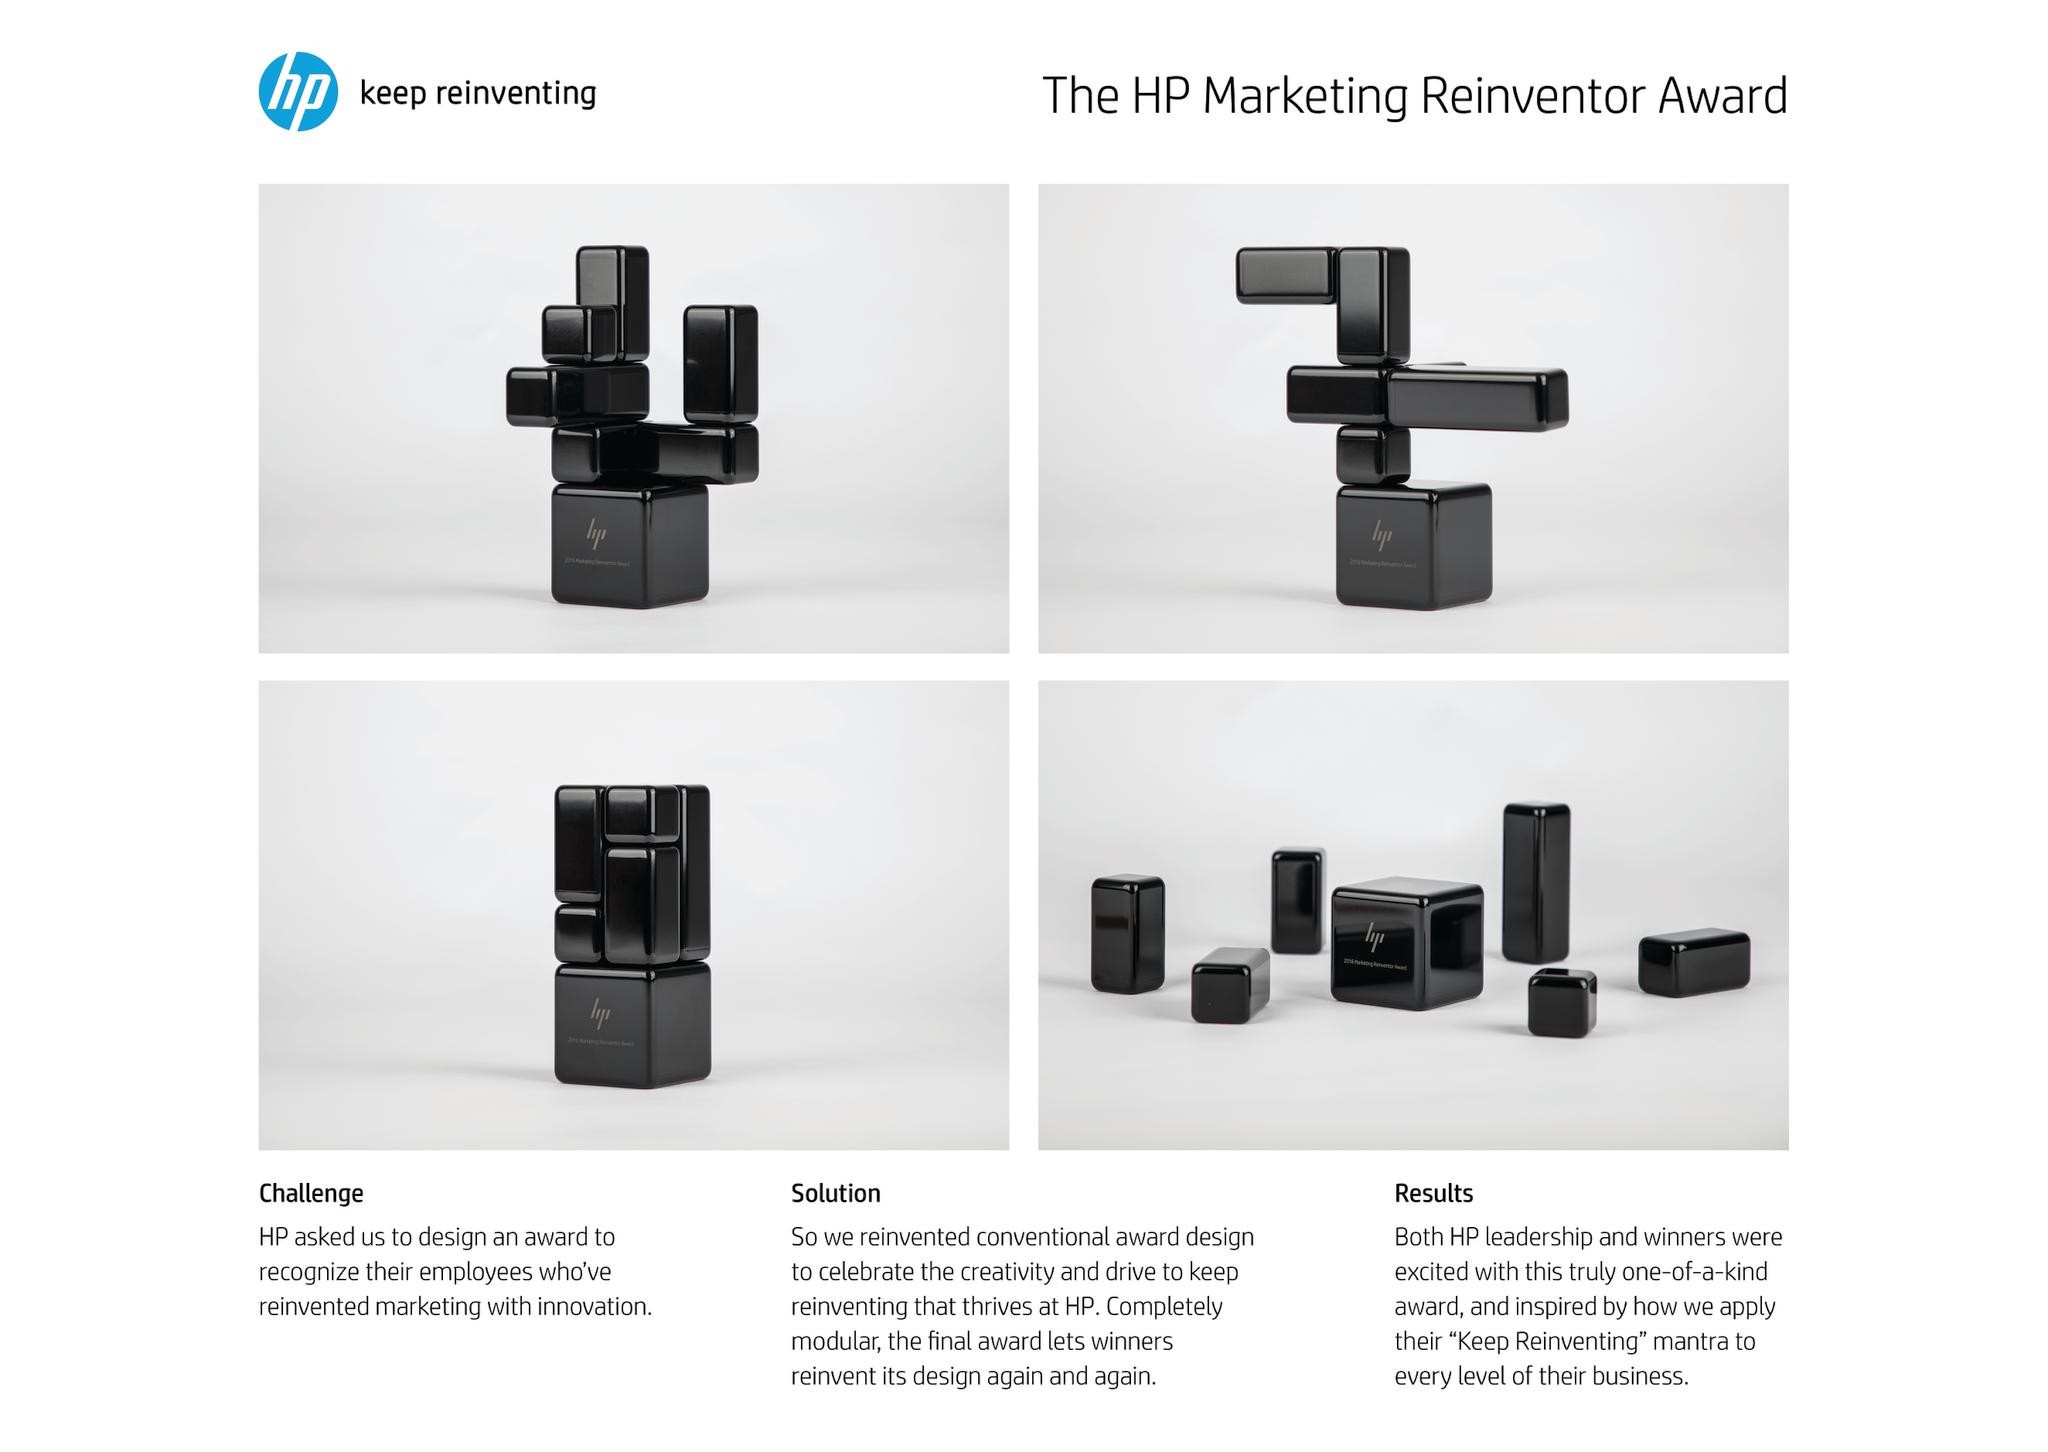 The HP Marketing Reinventor Award